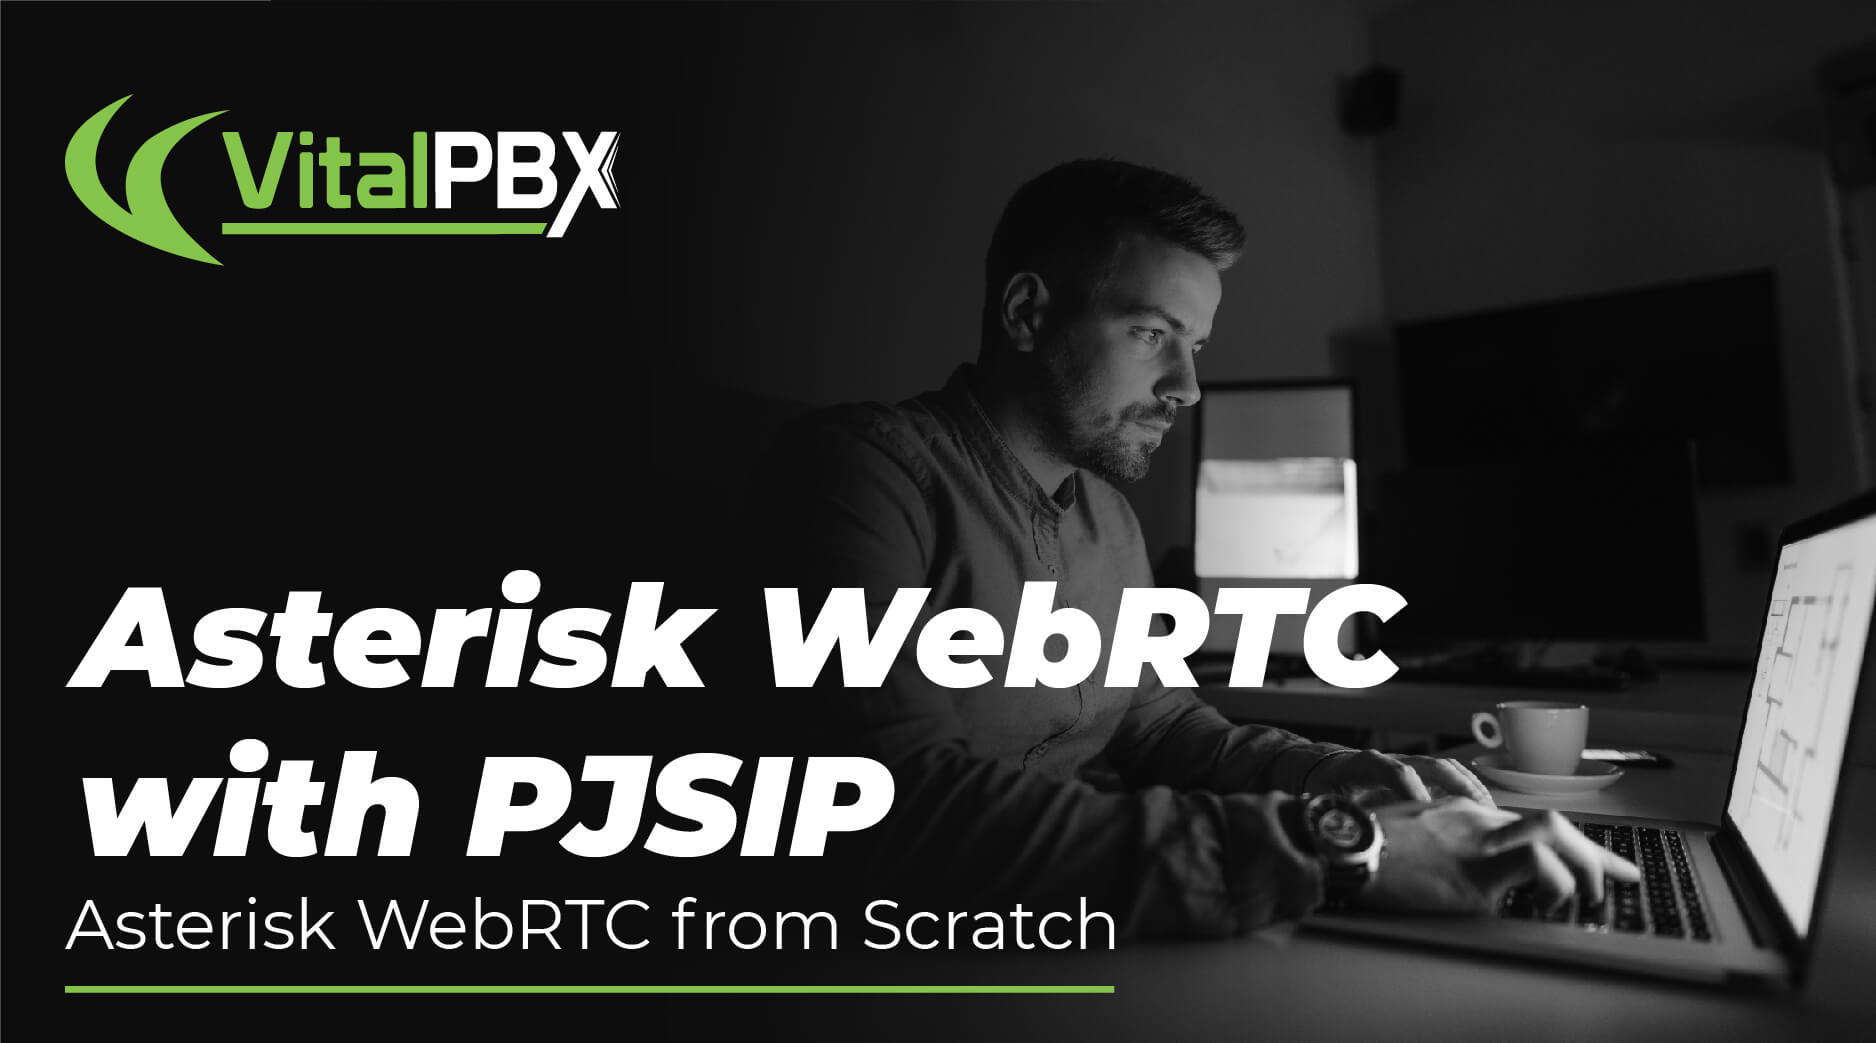 VitalPBX Asterisk WebRTC with PJSip